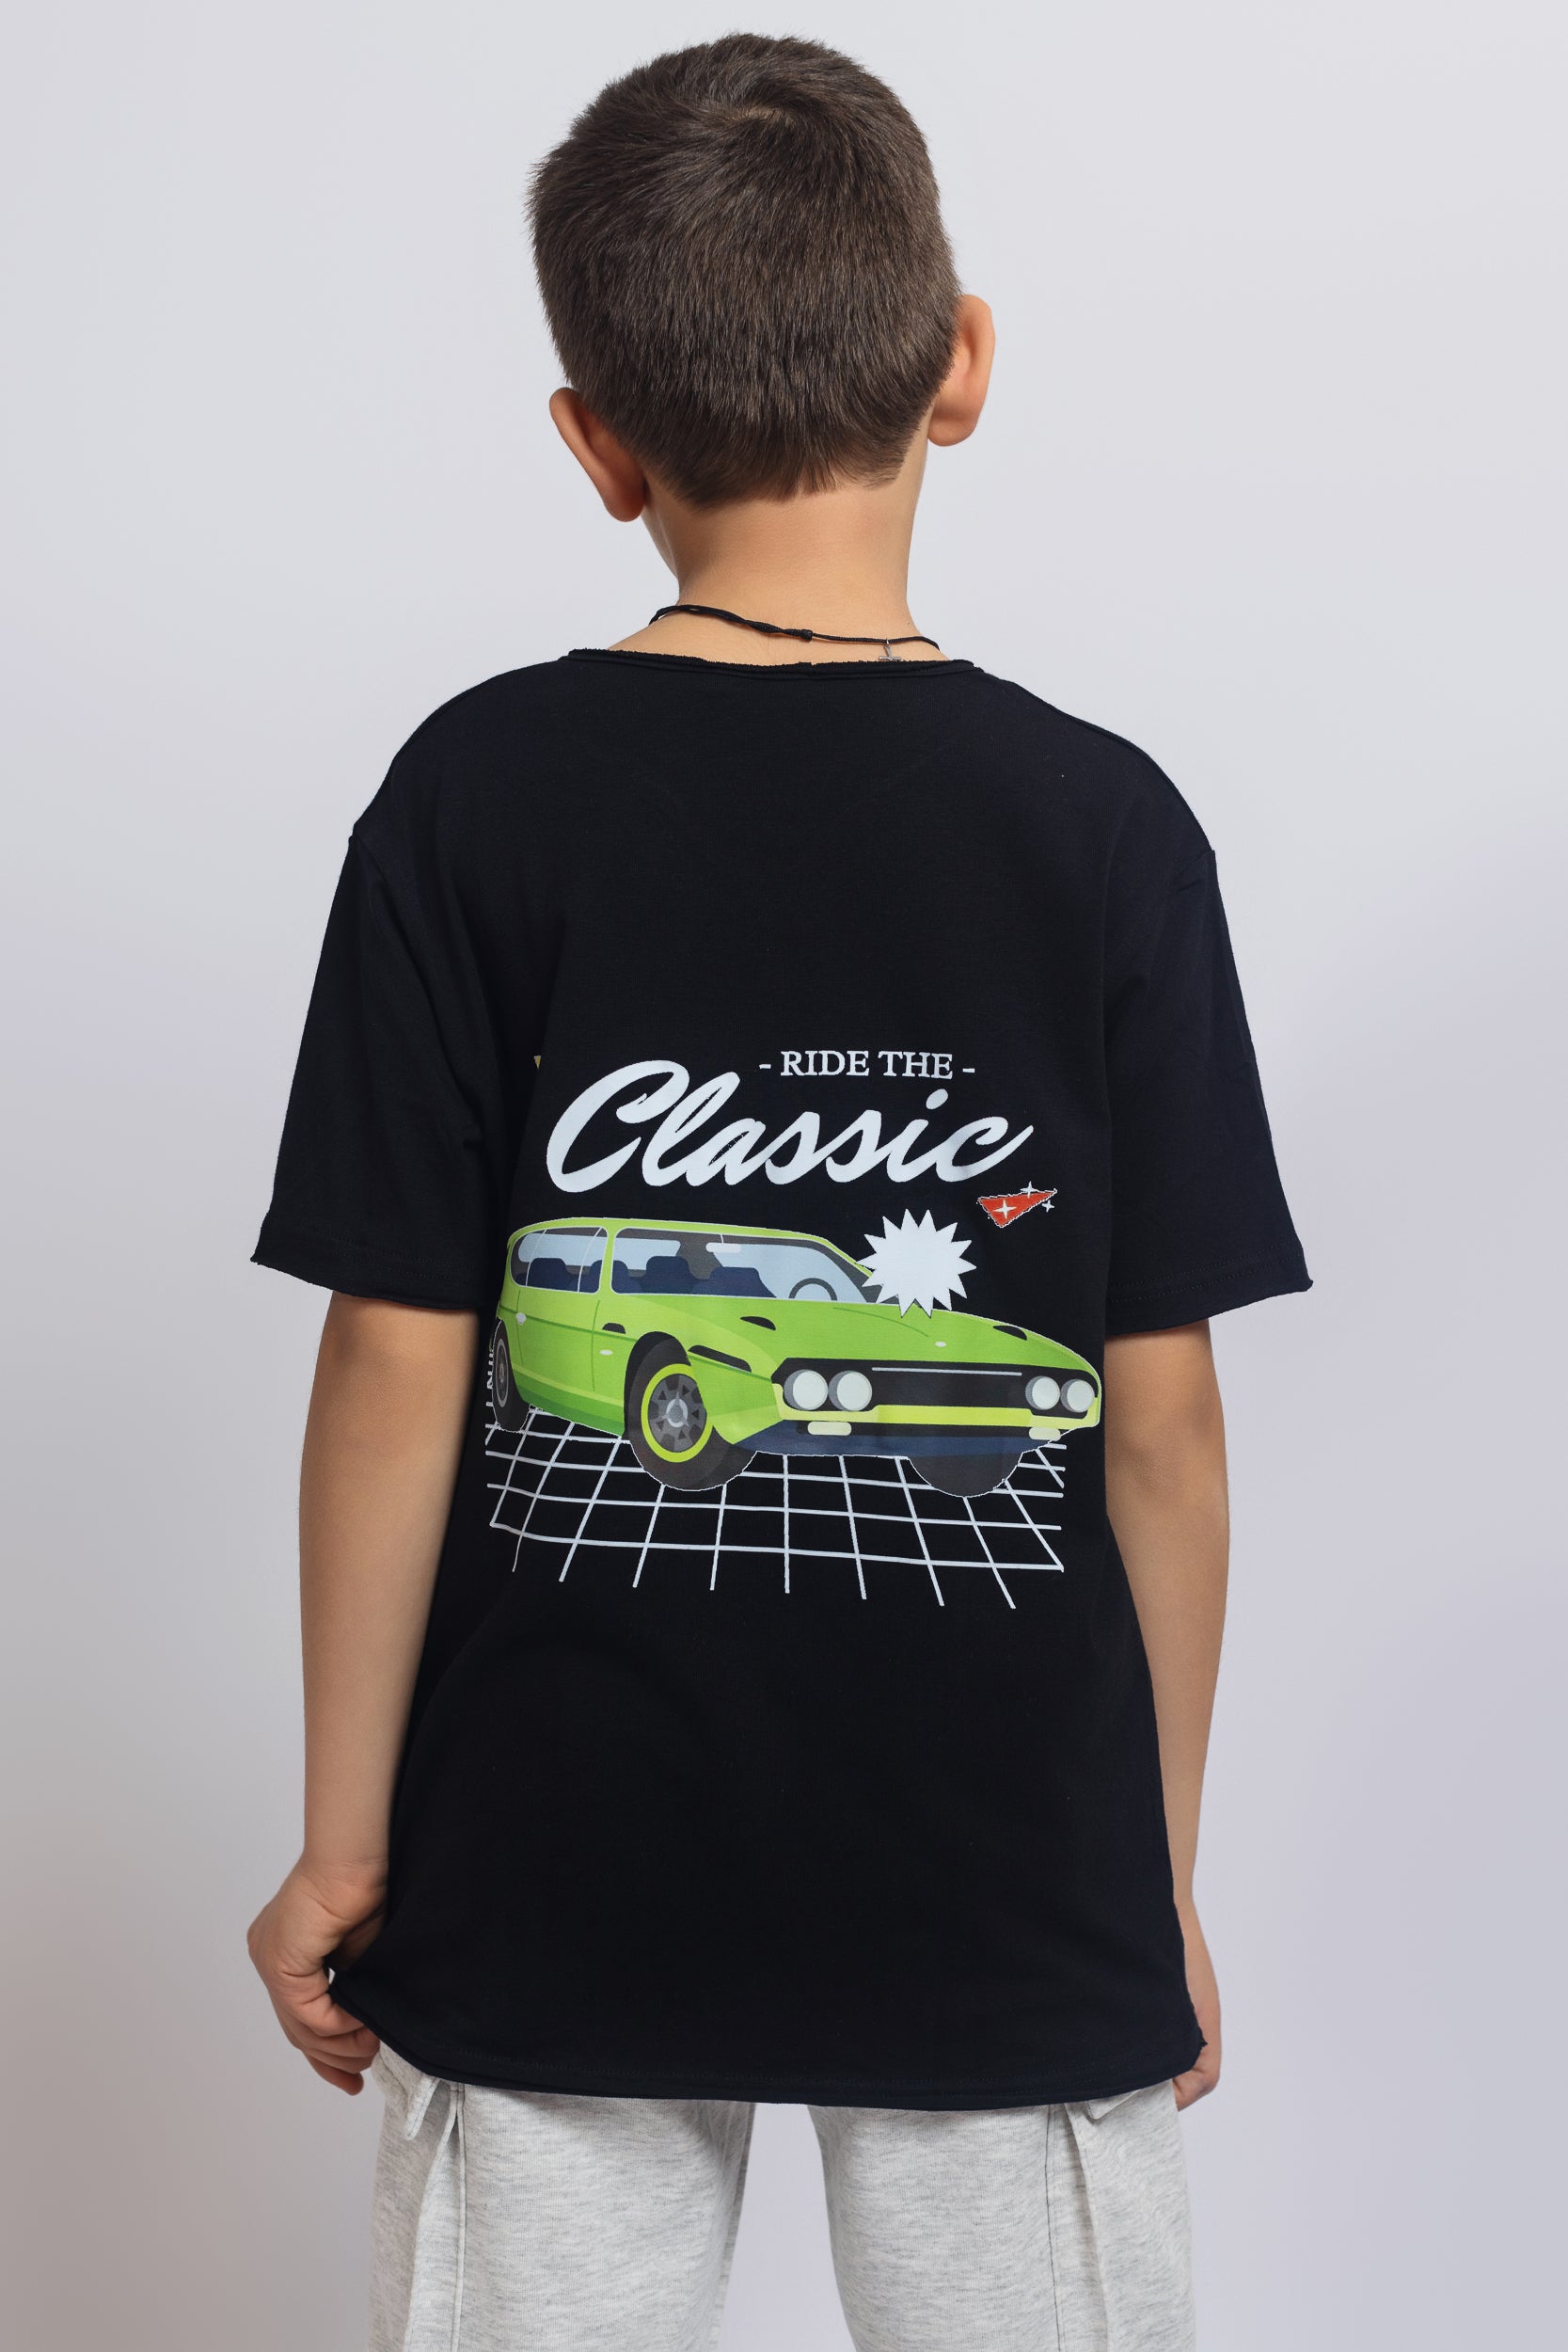 Classic Cars T-Shirt For Boys - Black